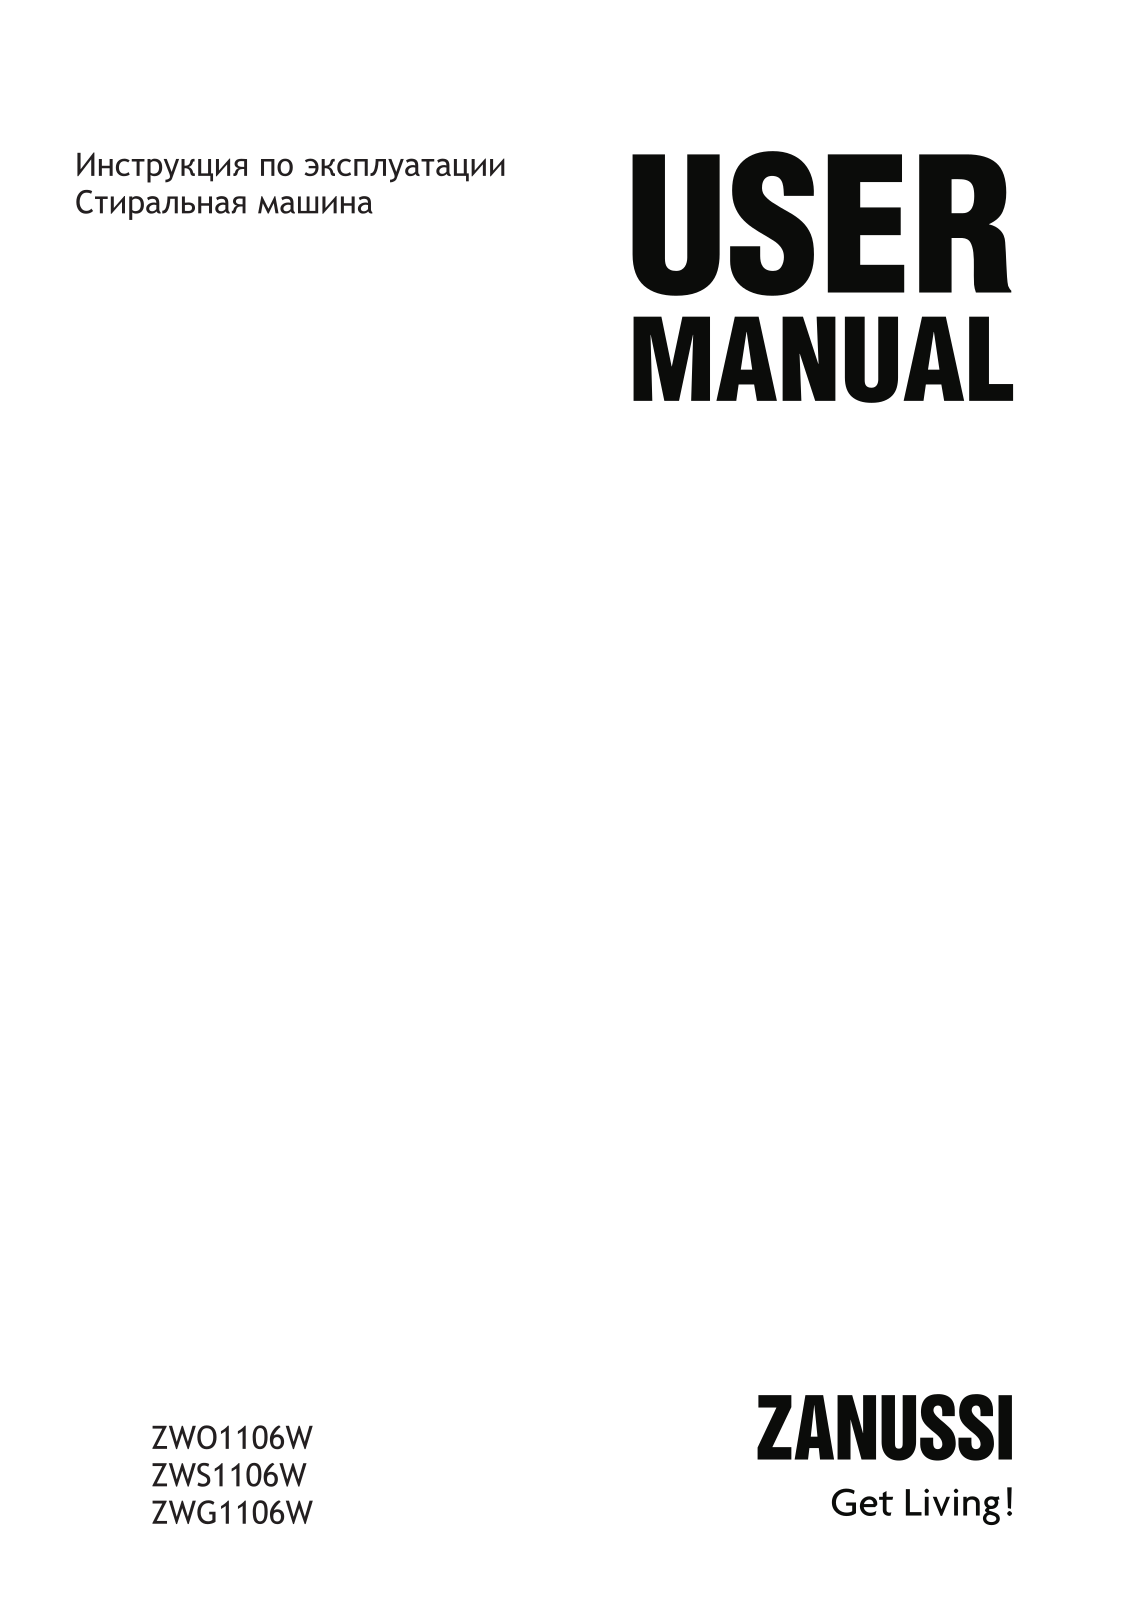 Zanussi ZWO 1106W User Manual